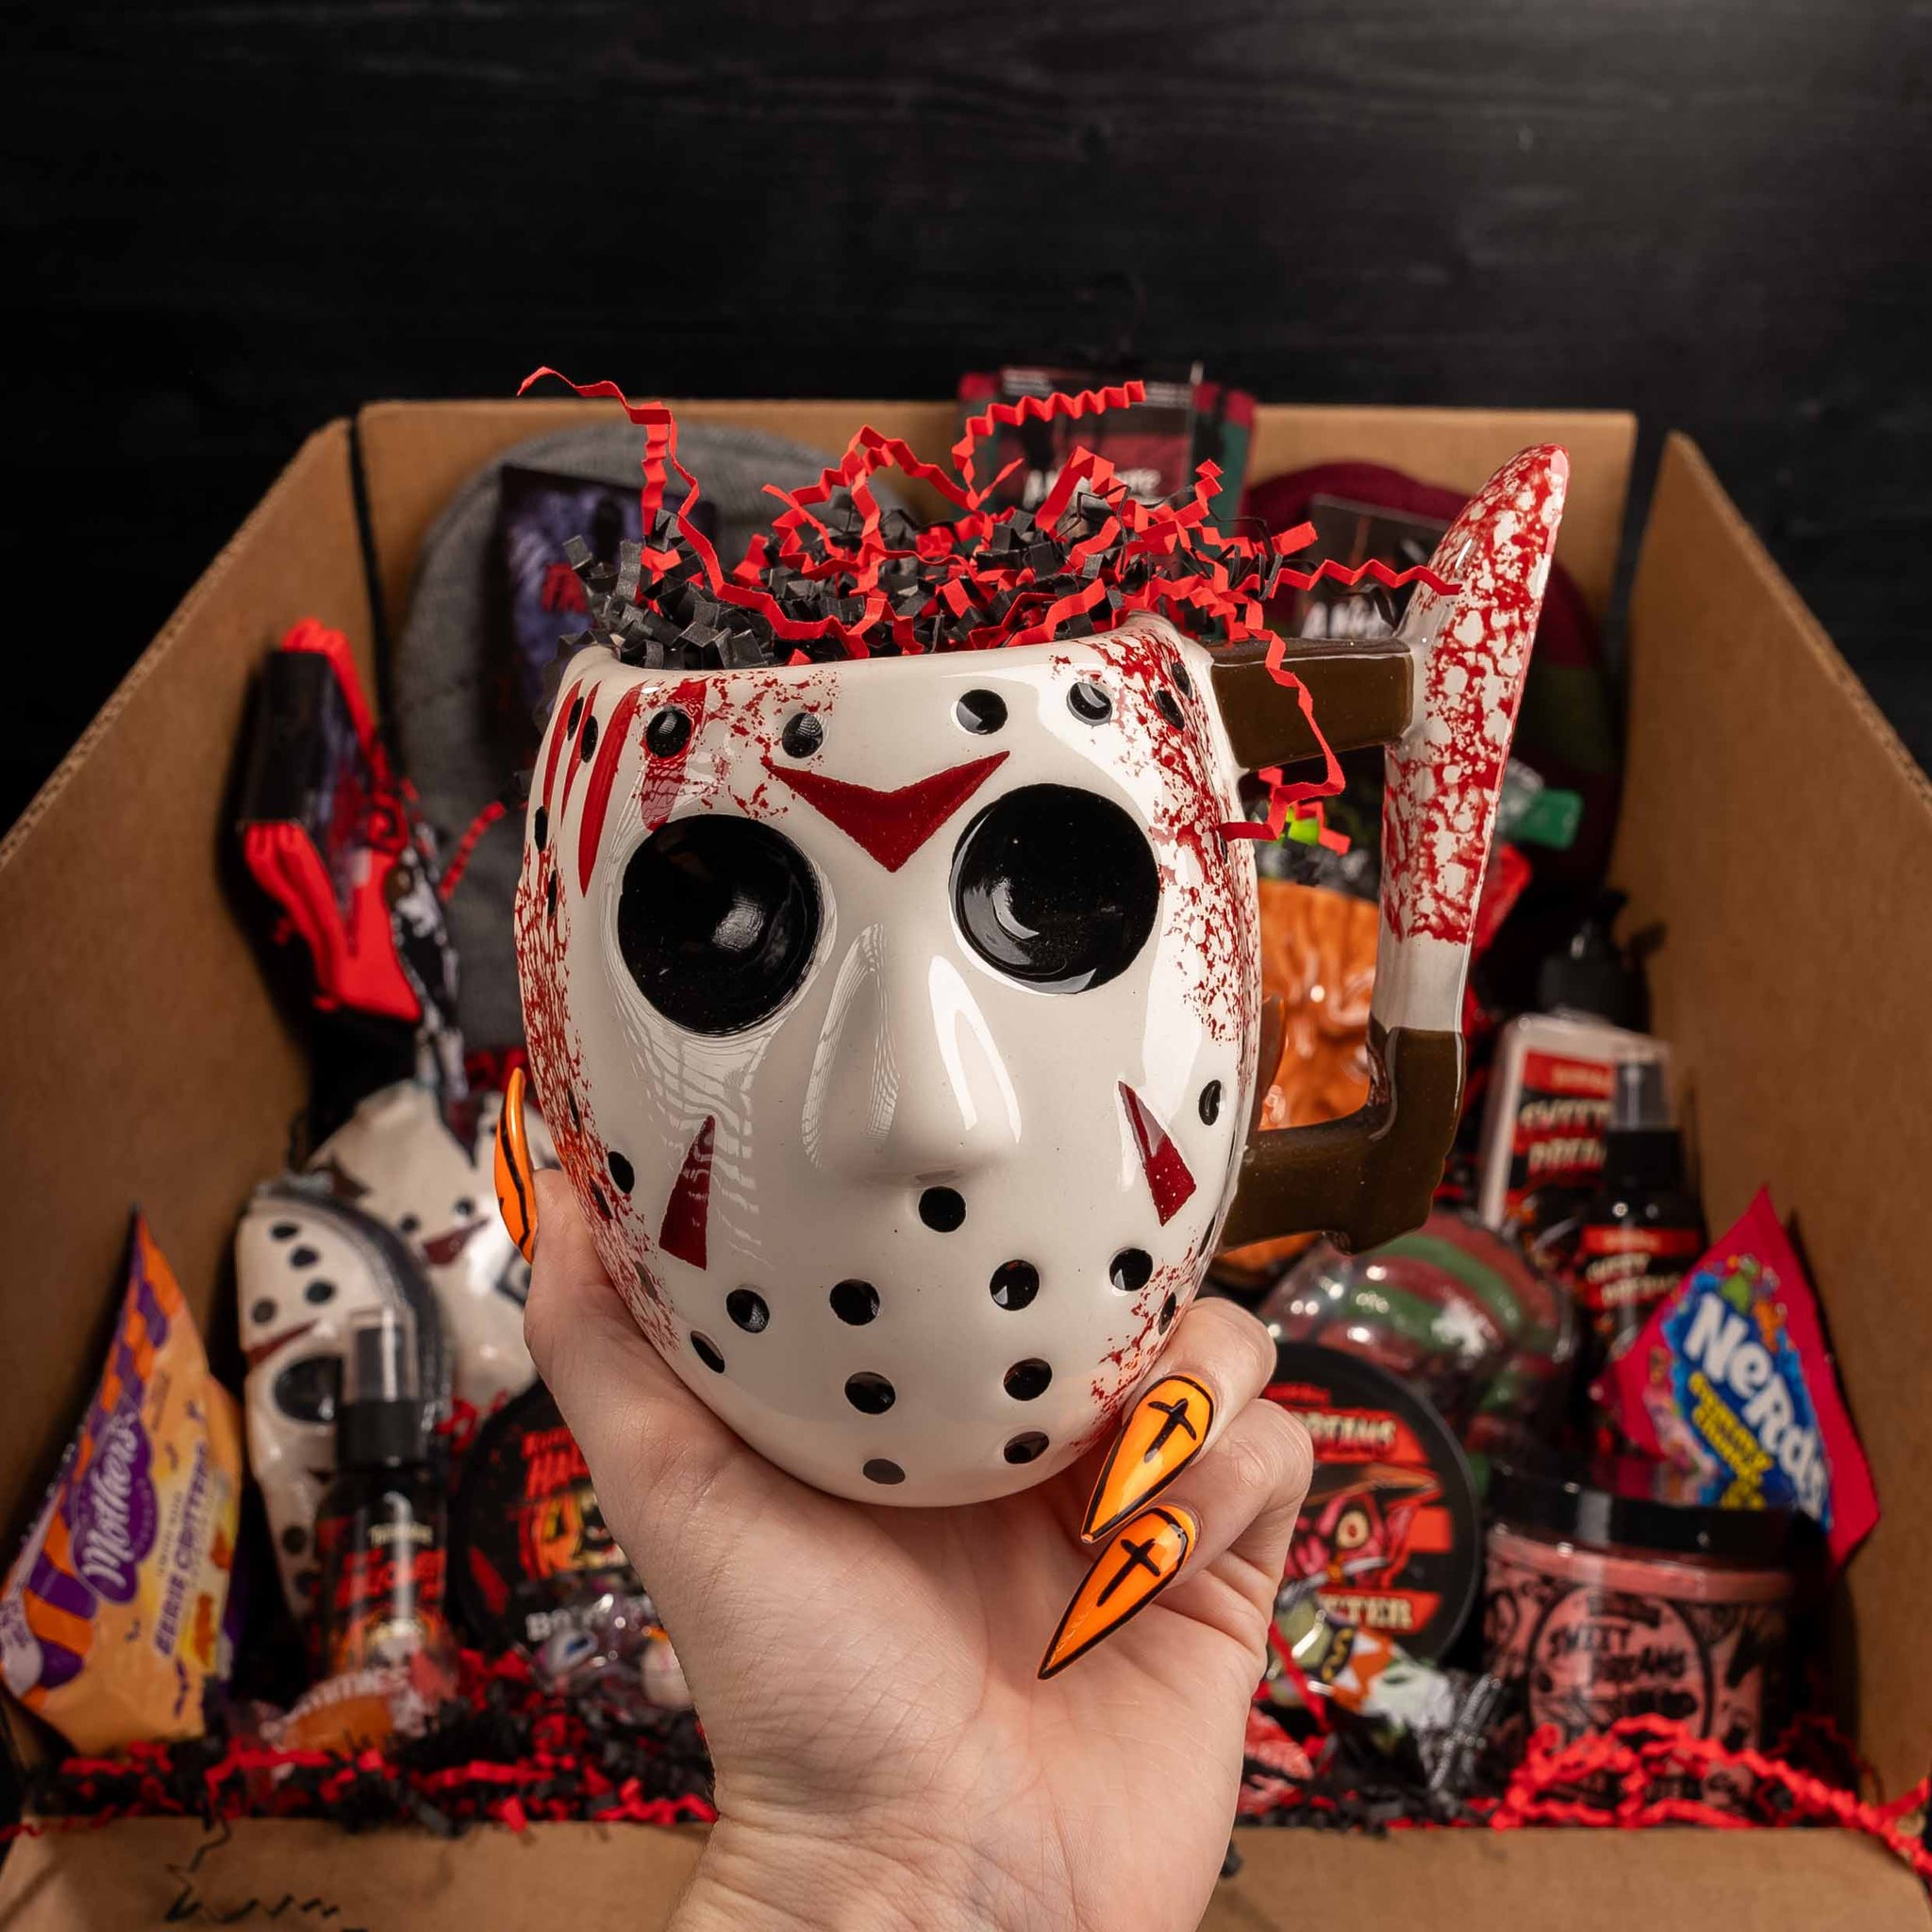 Freddy vs Jason Box